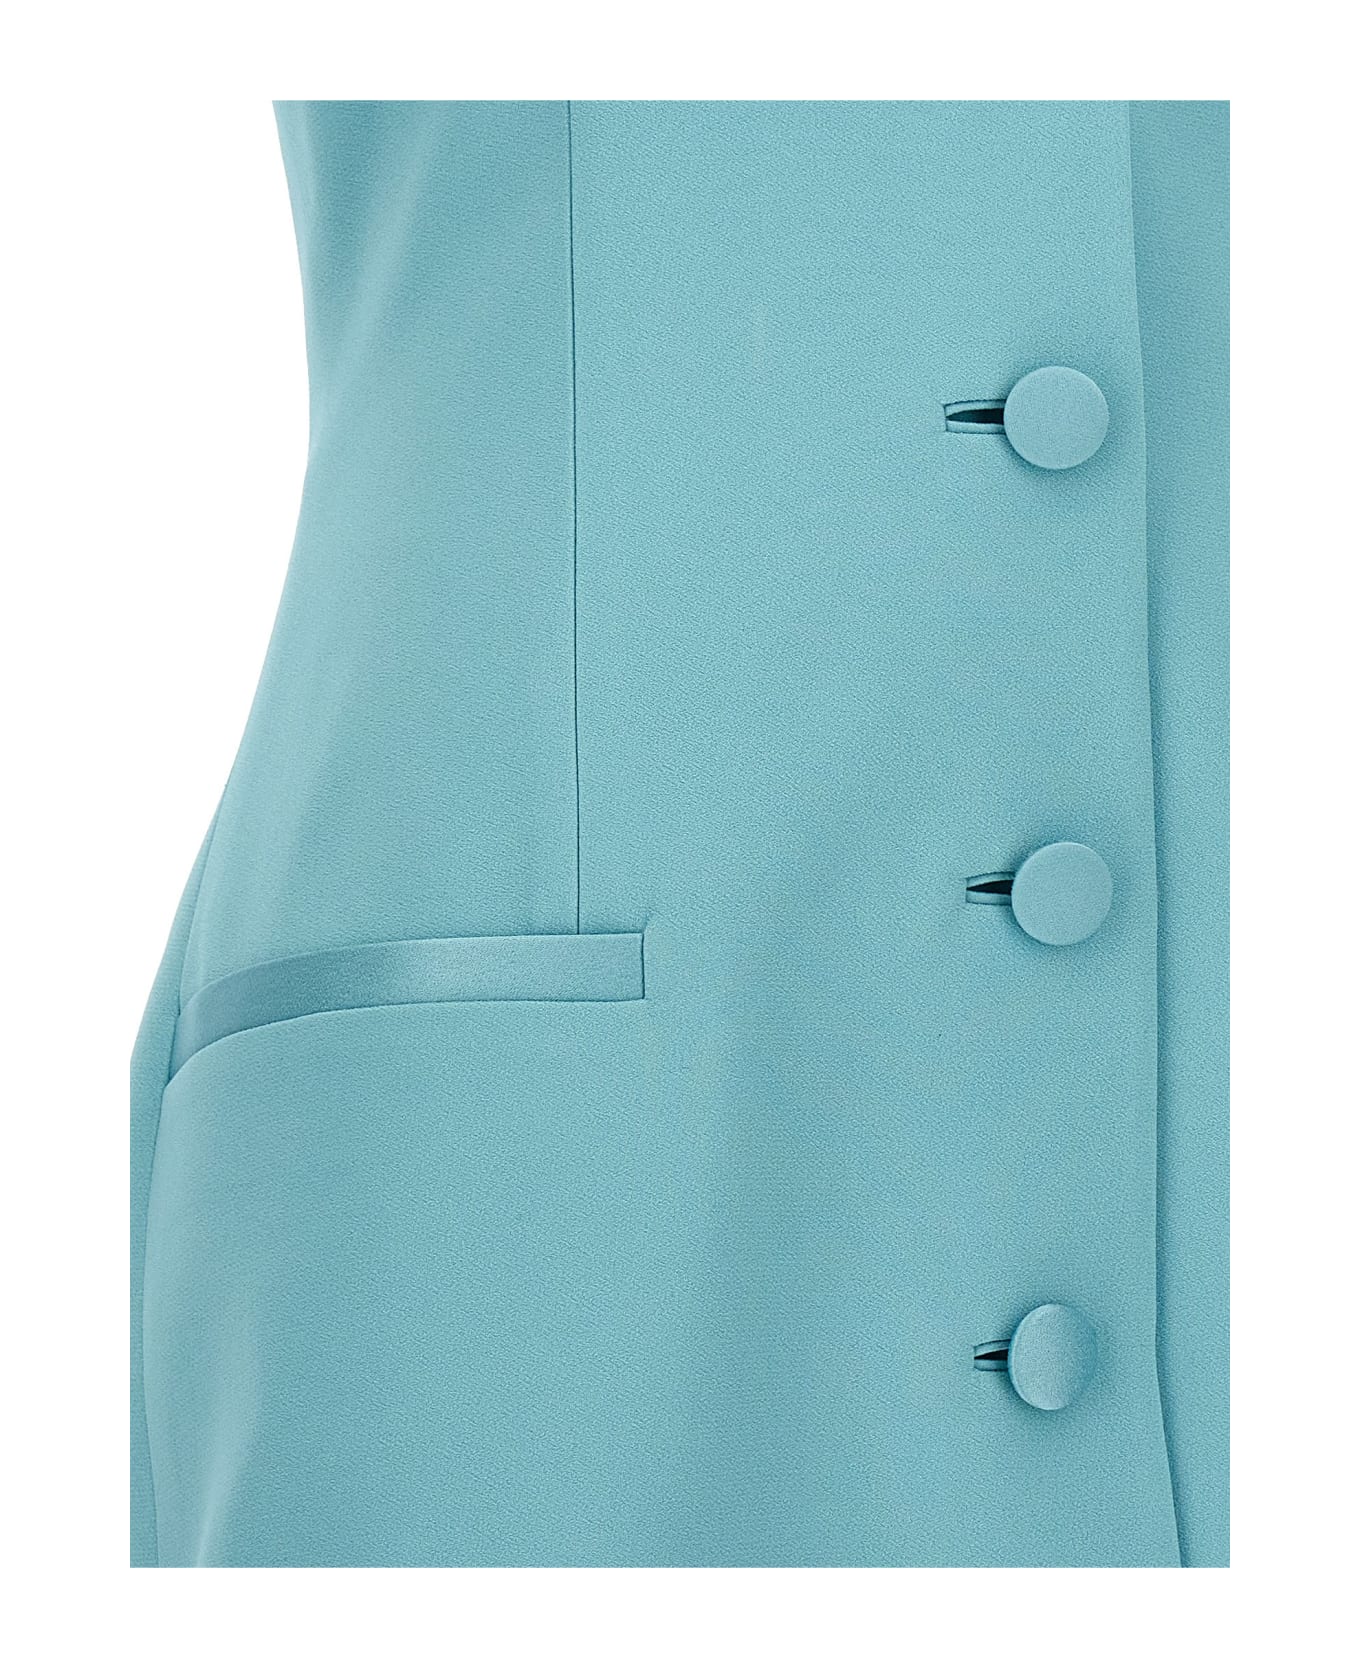 Versace Vest Dress - Light Blue